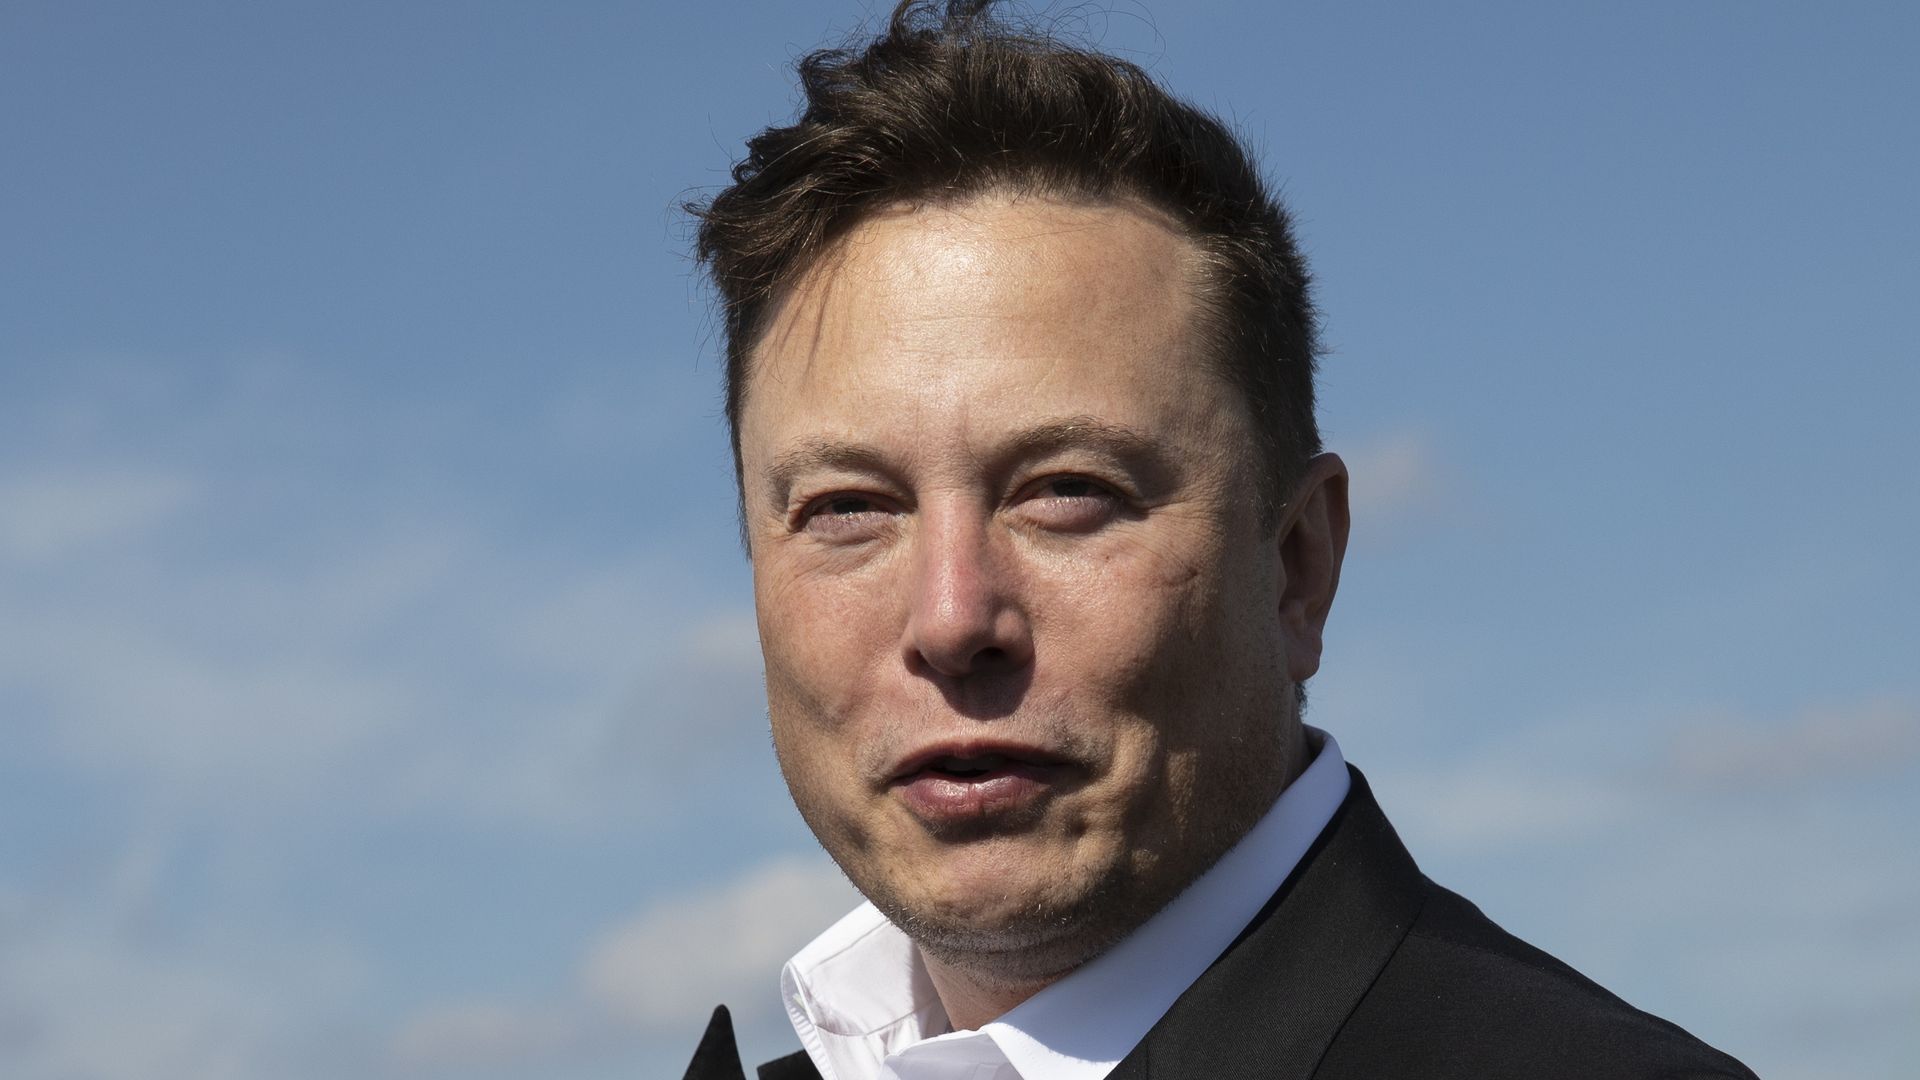 Photo of Elon Musk's face